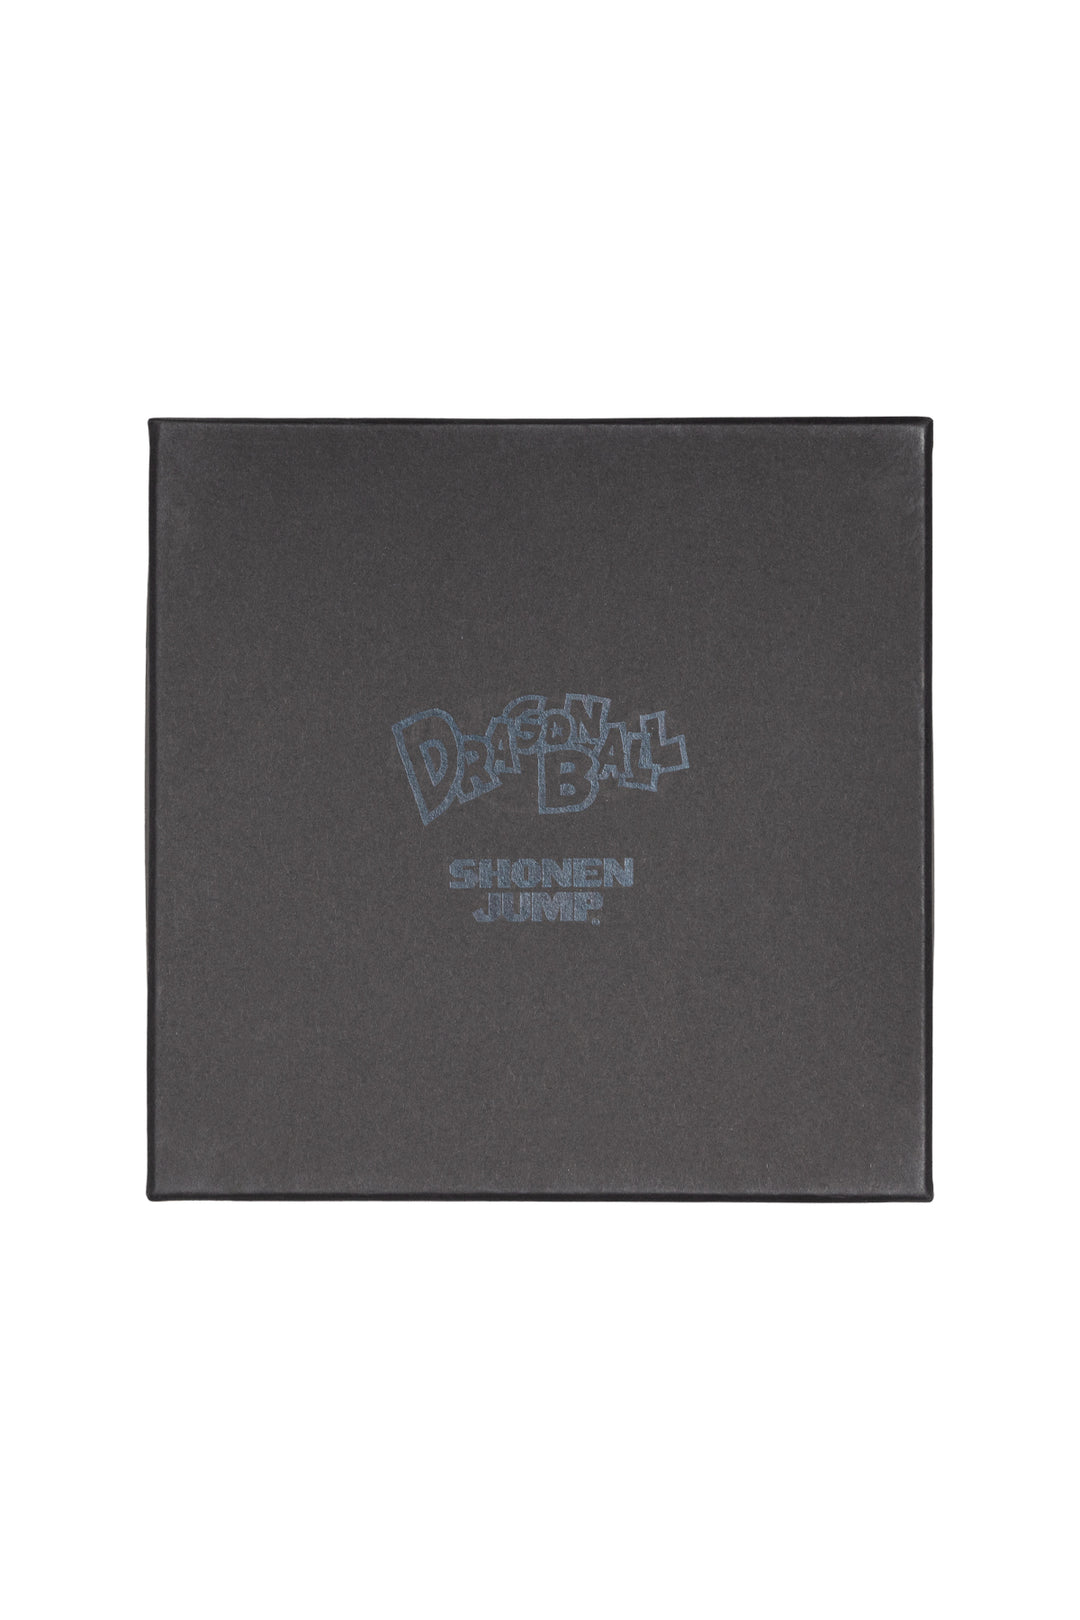 Dragon Ball Vol. 3 Cover Ceramic Catch-All Tray with Collectors Box